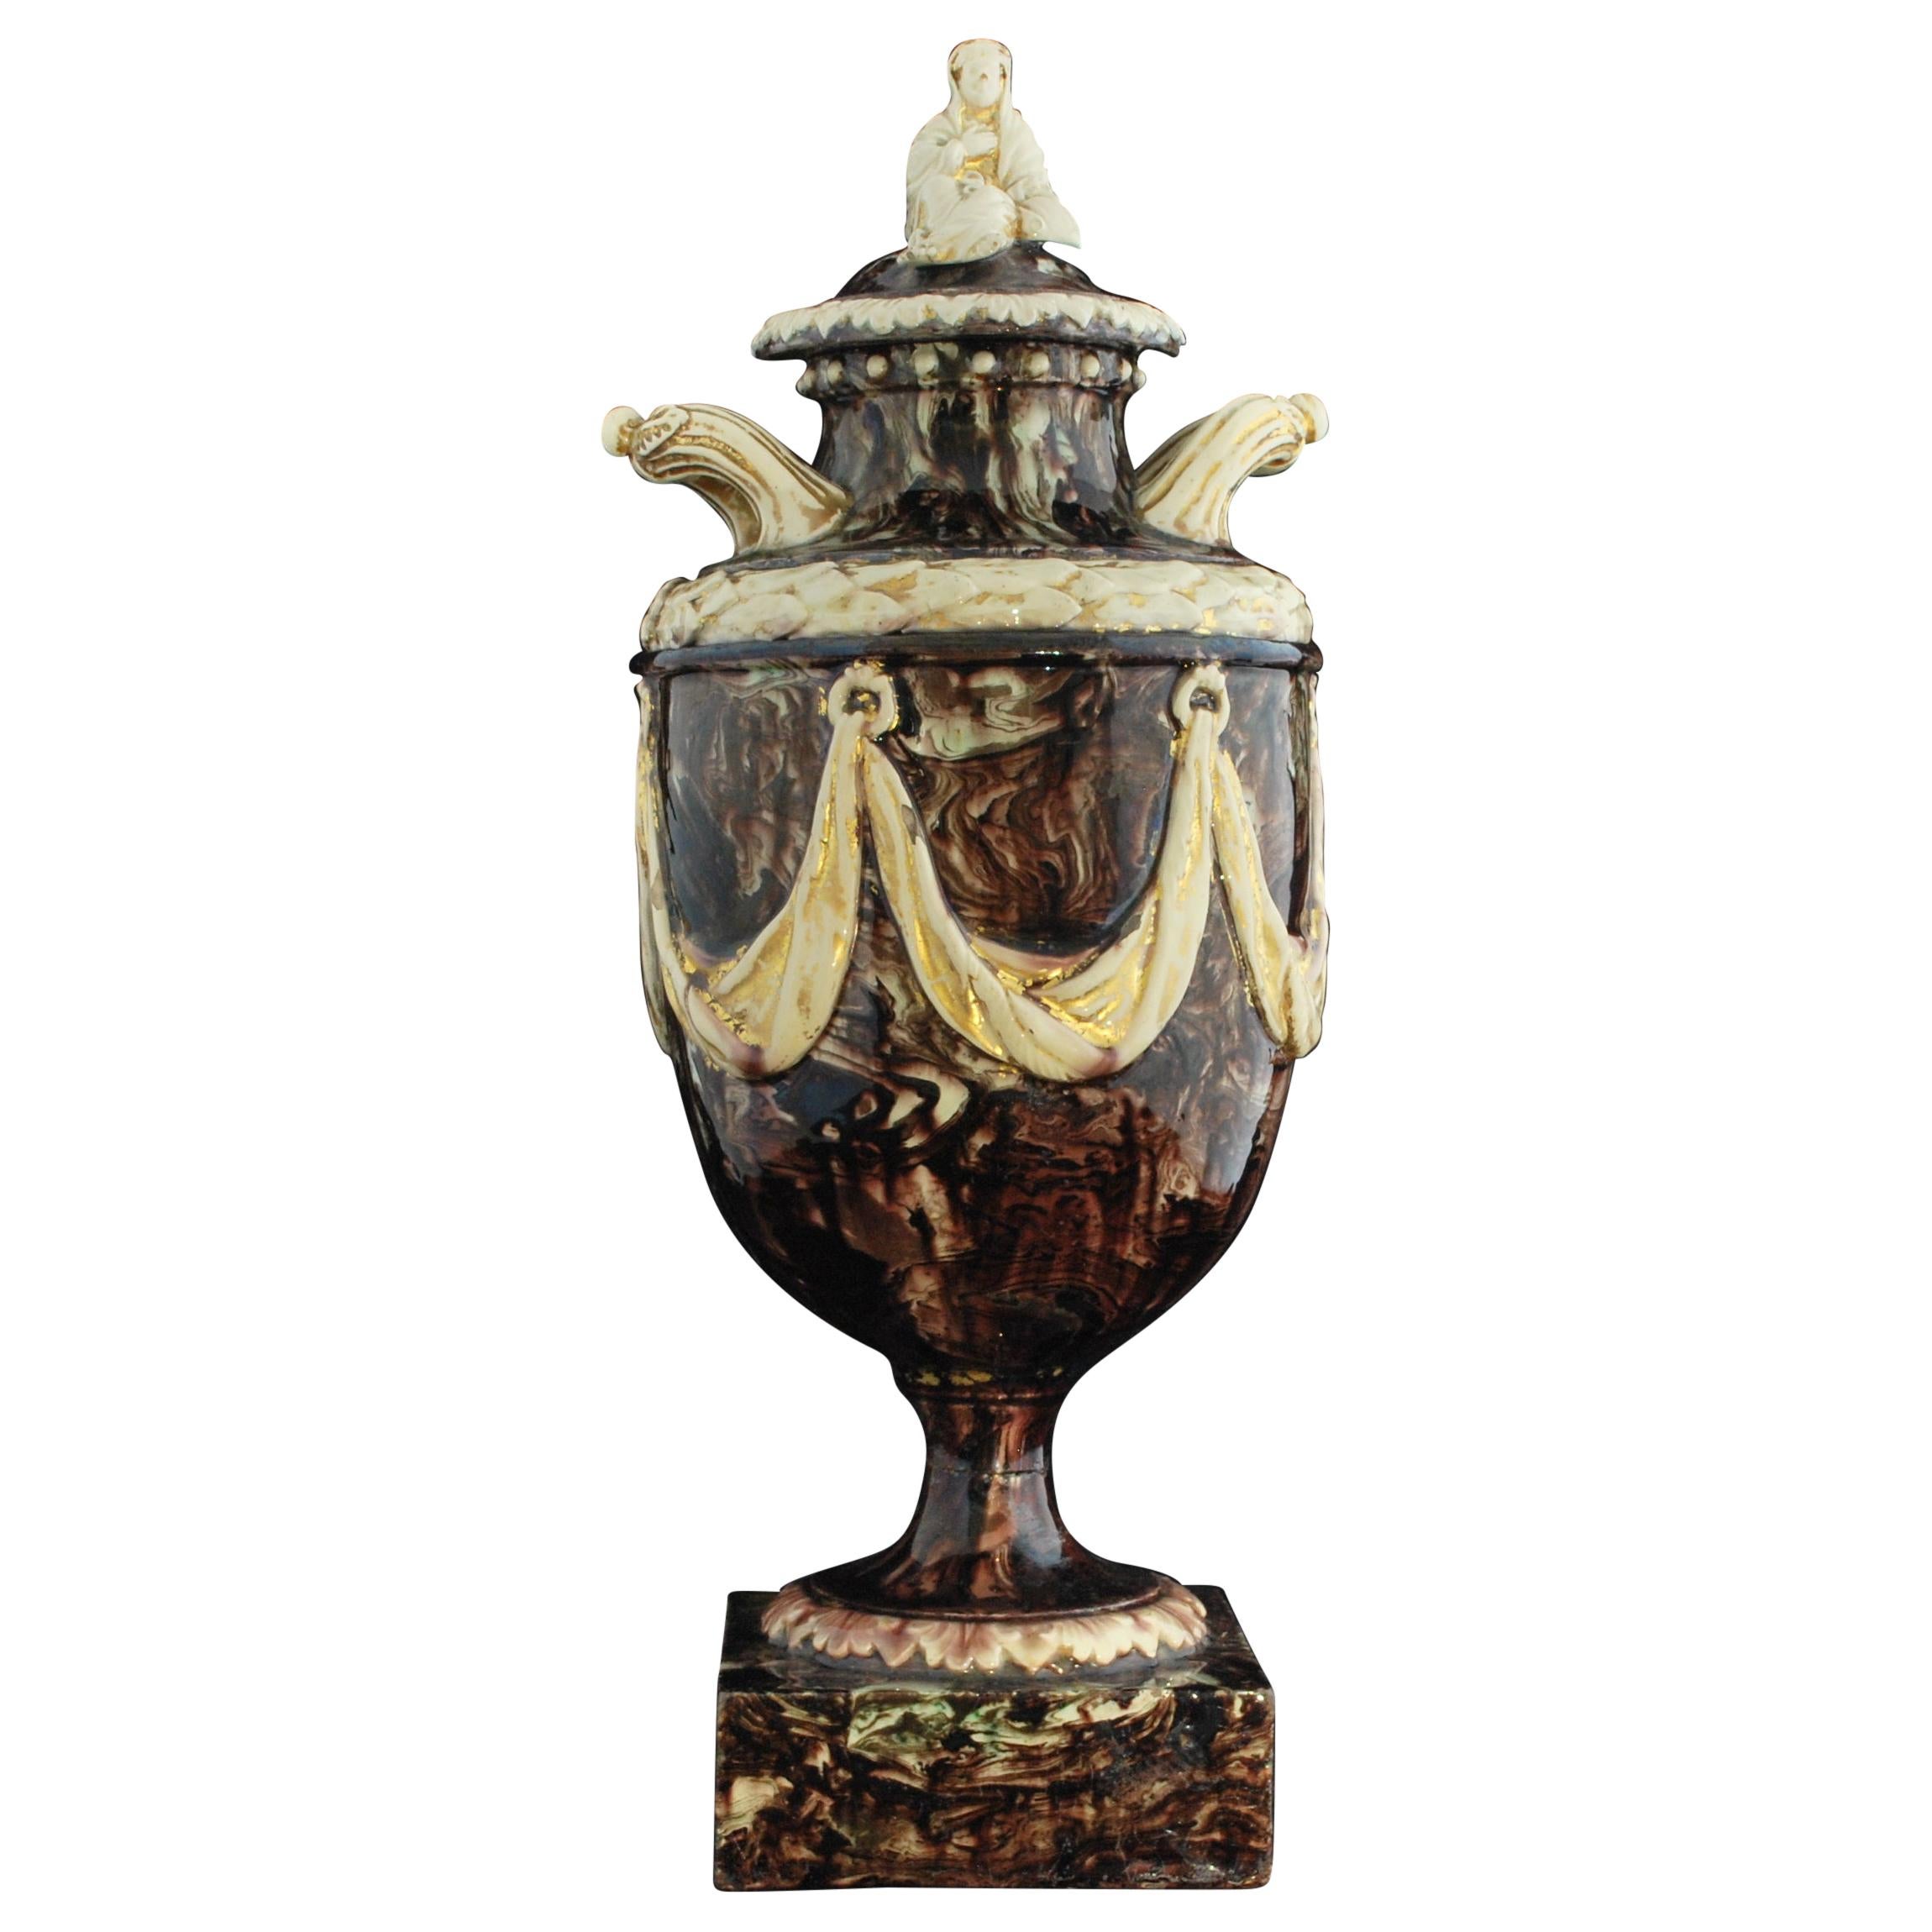 Agateware Vase, Attributed to Steitz, circa 1775